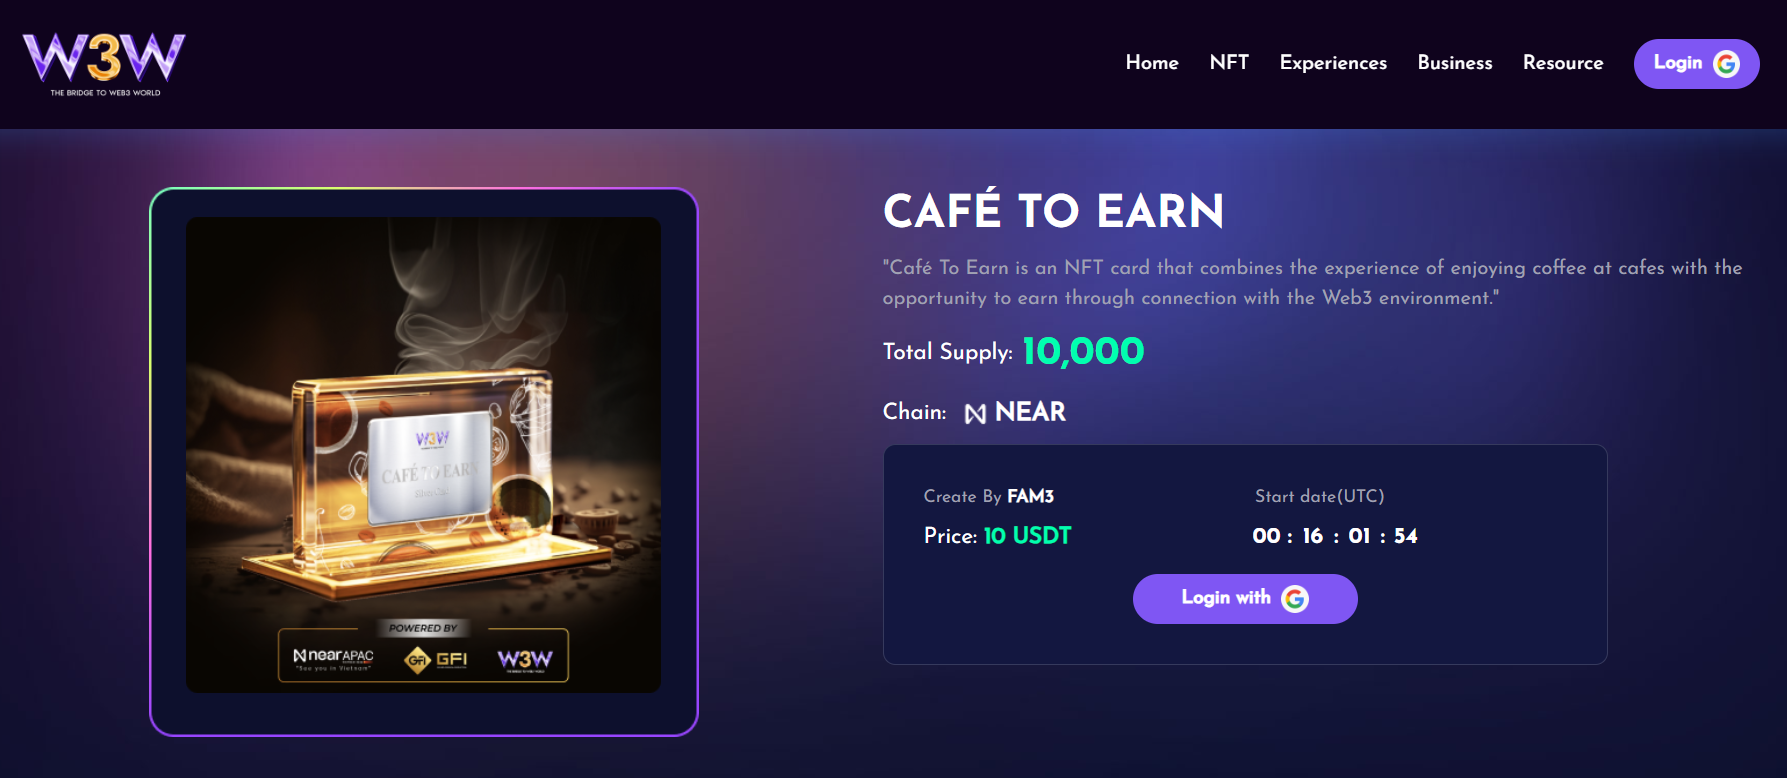 NFT Cafe To Earn